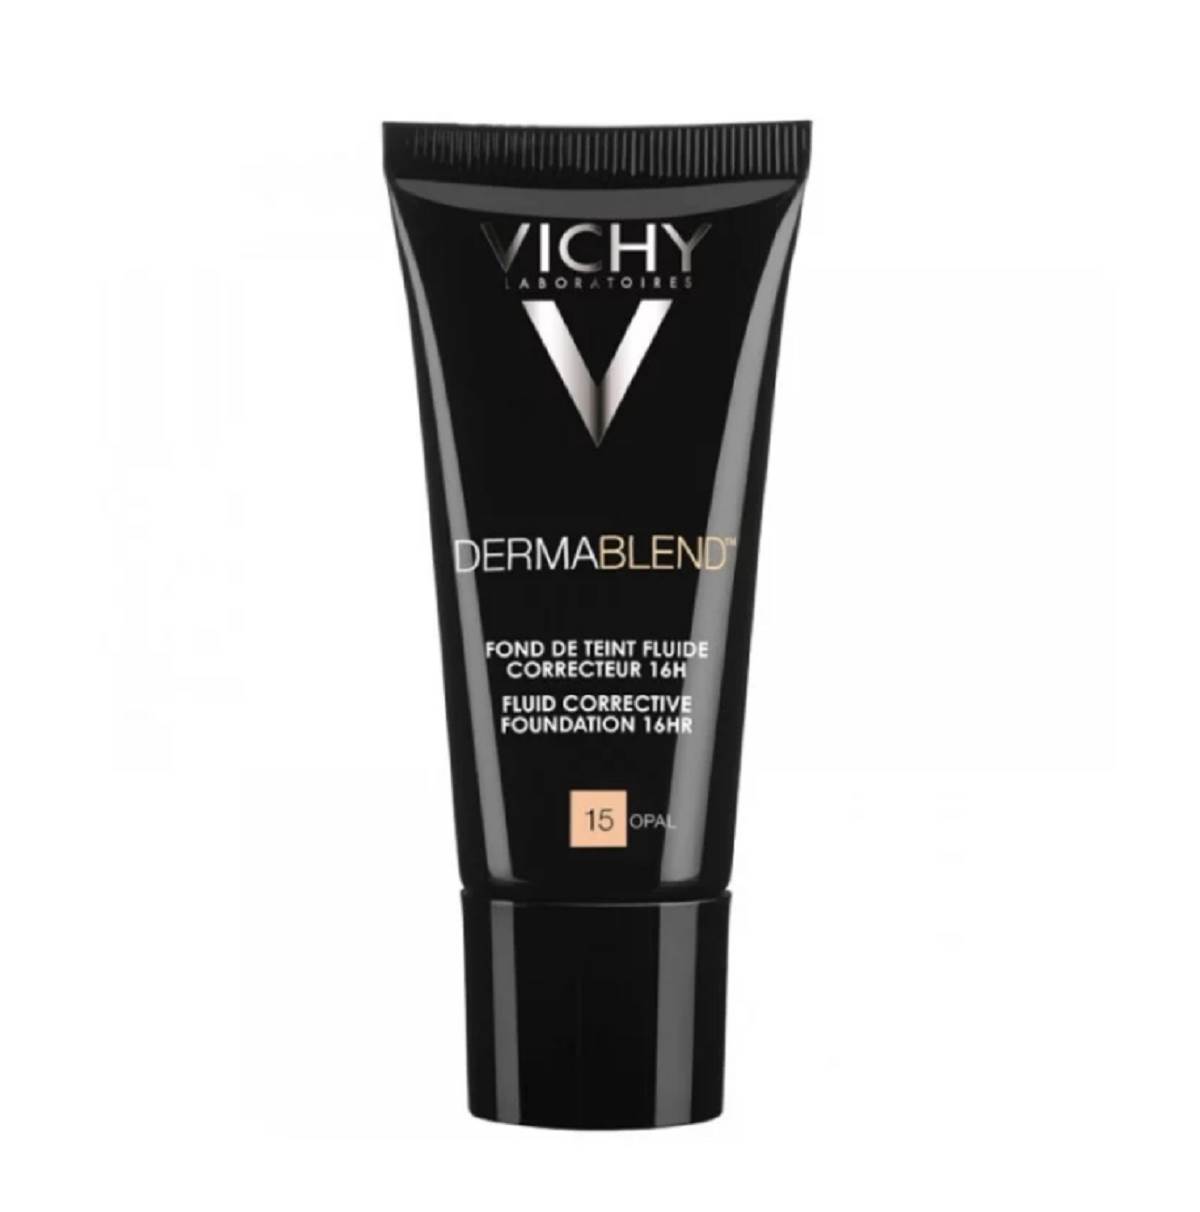  Vichy Dermablend puder prekriva akne, crvenilo, ožiljke, tamne mrlje i podočnjake. 